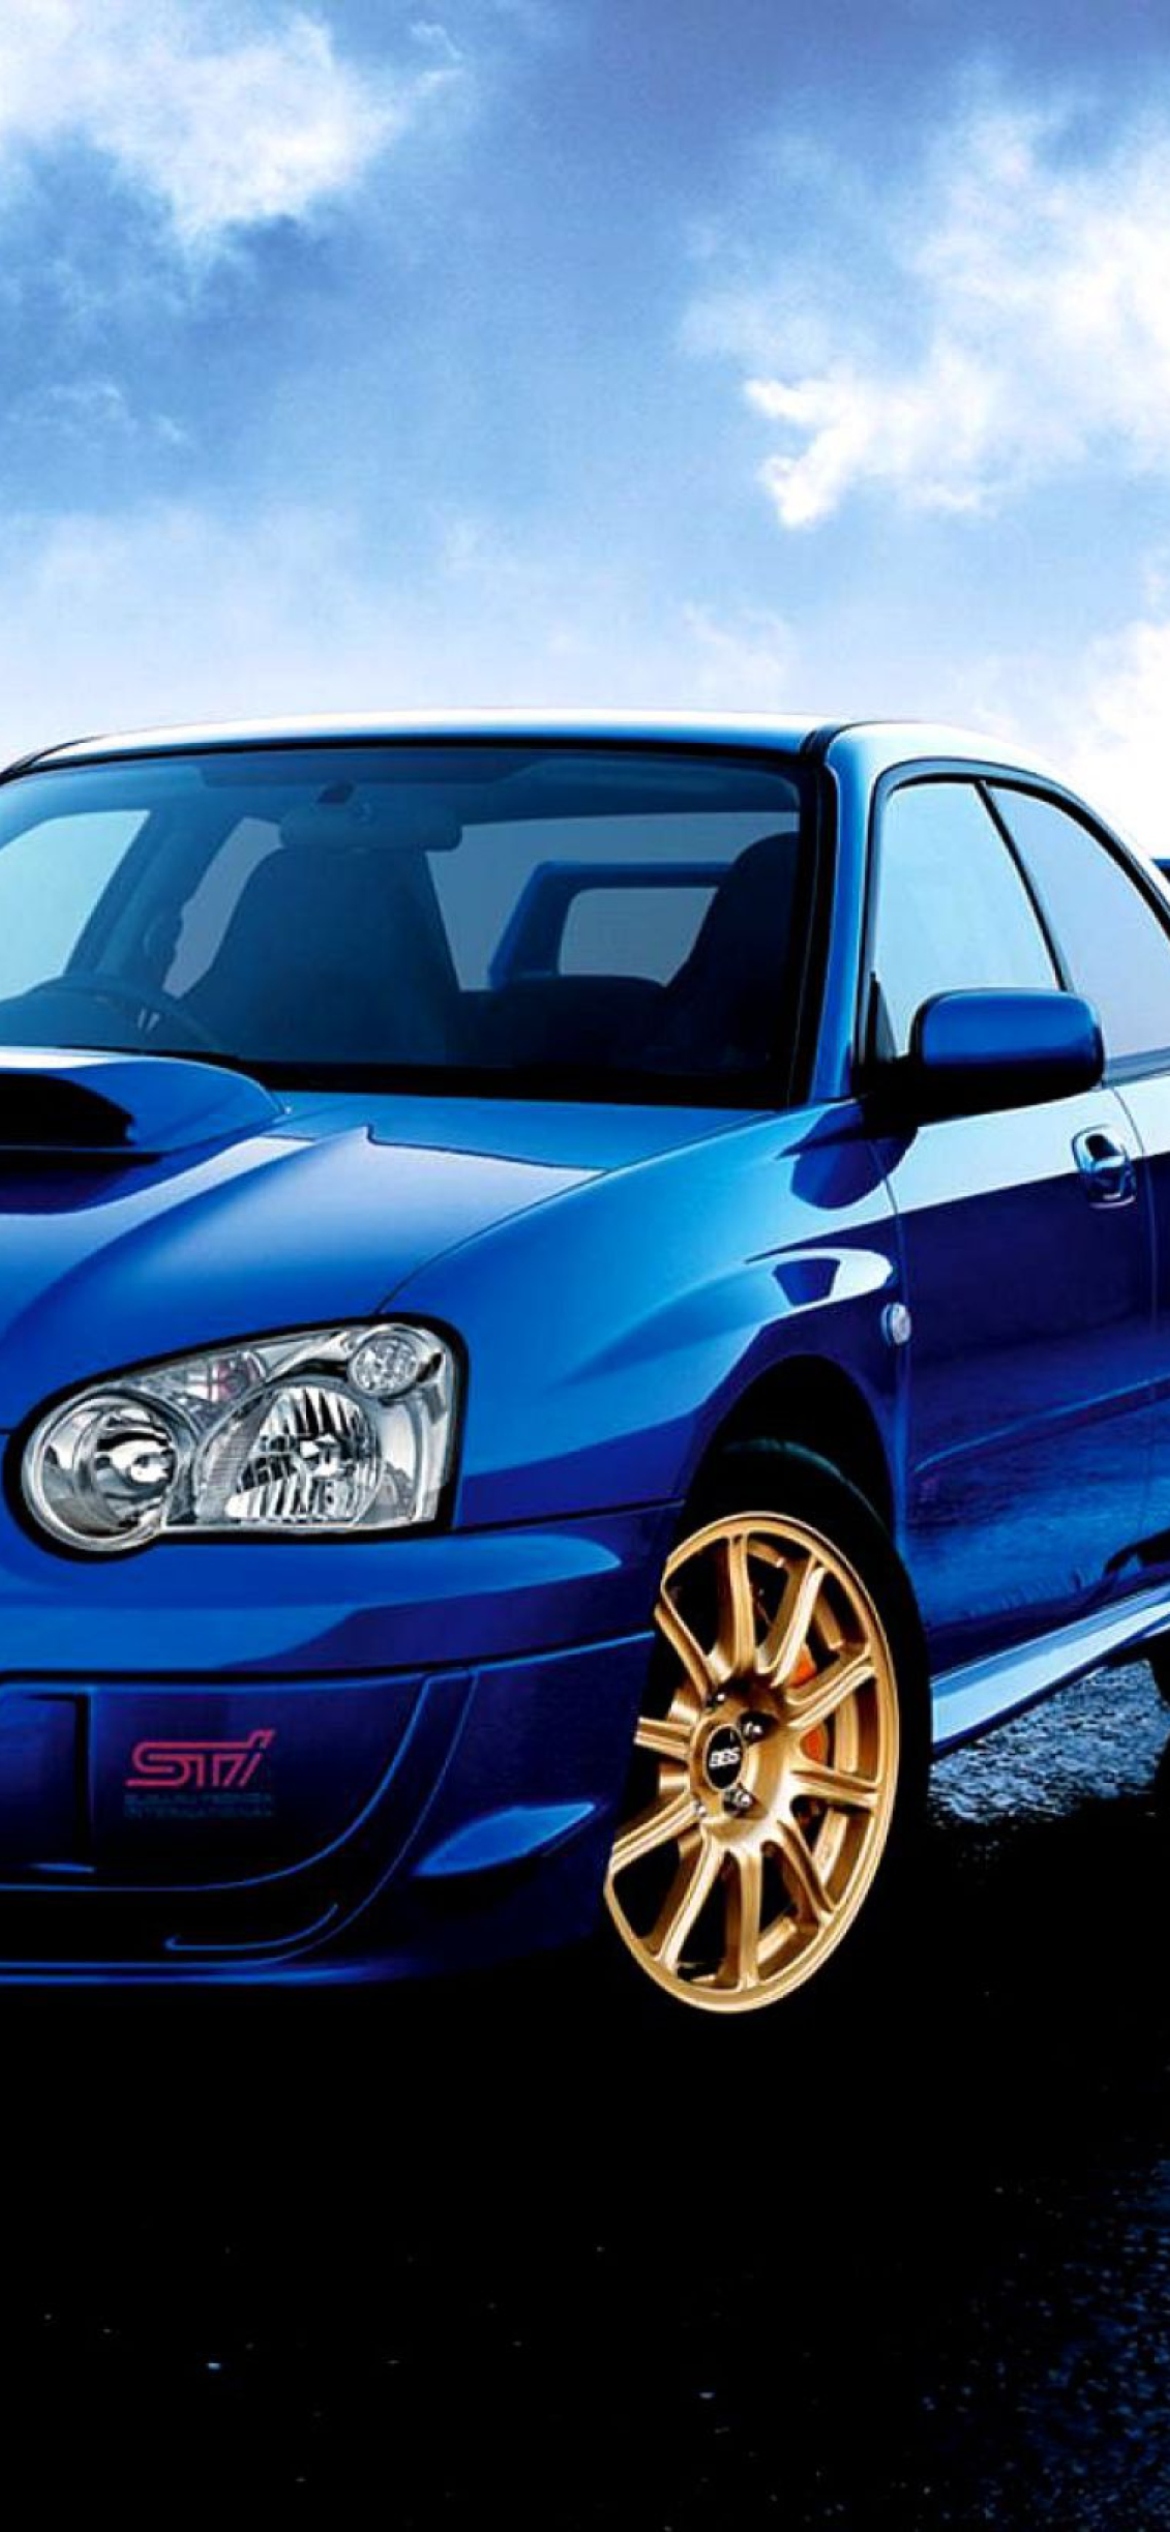 Das Subaru Impreza Wrx Sti Wallpaper 1170x2532